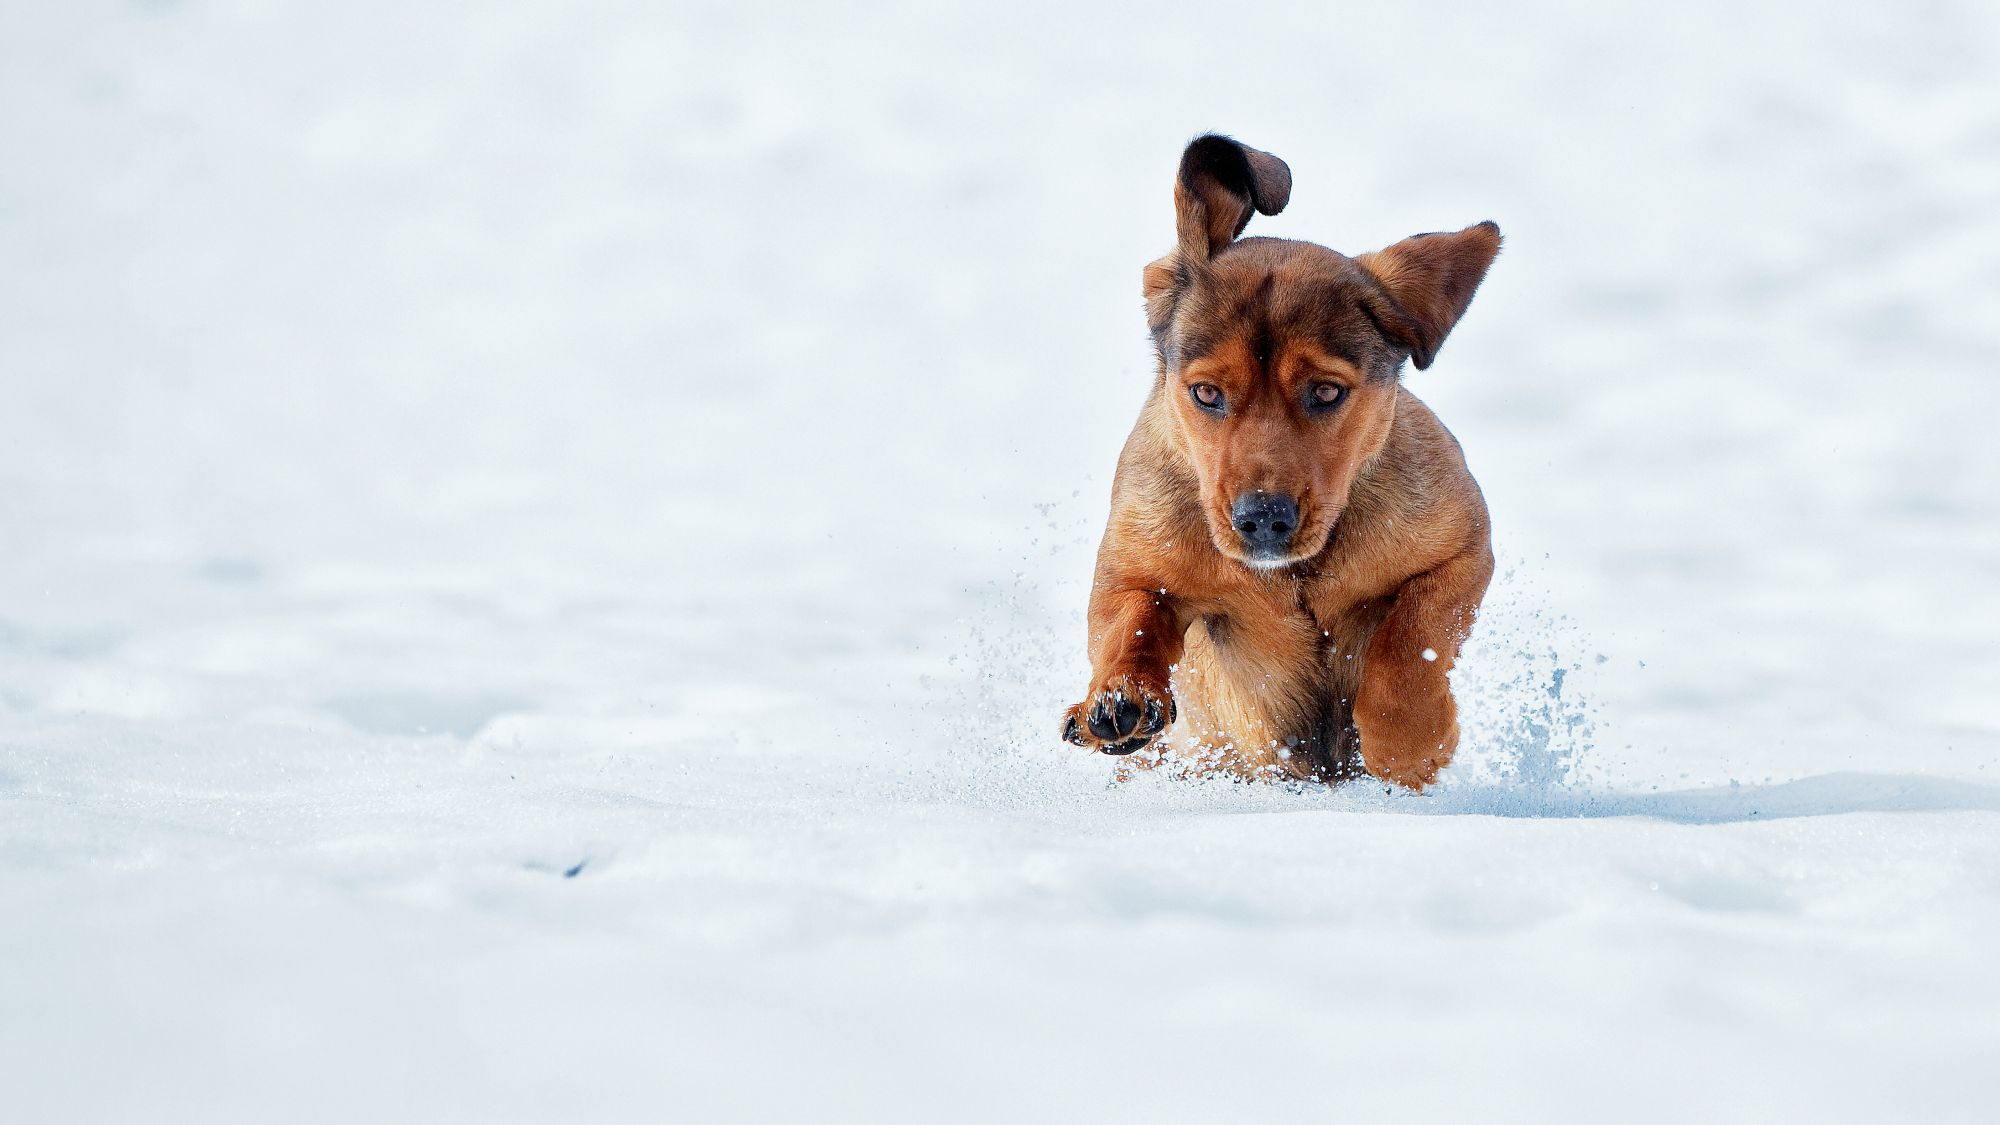 Alpine Dachsbracke puppy bounding through snow